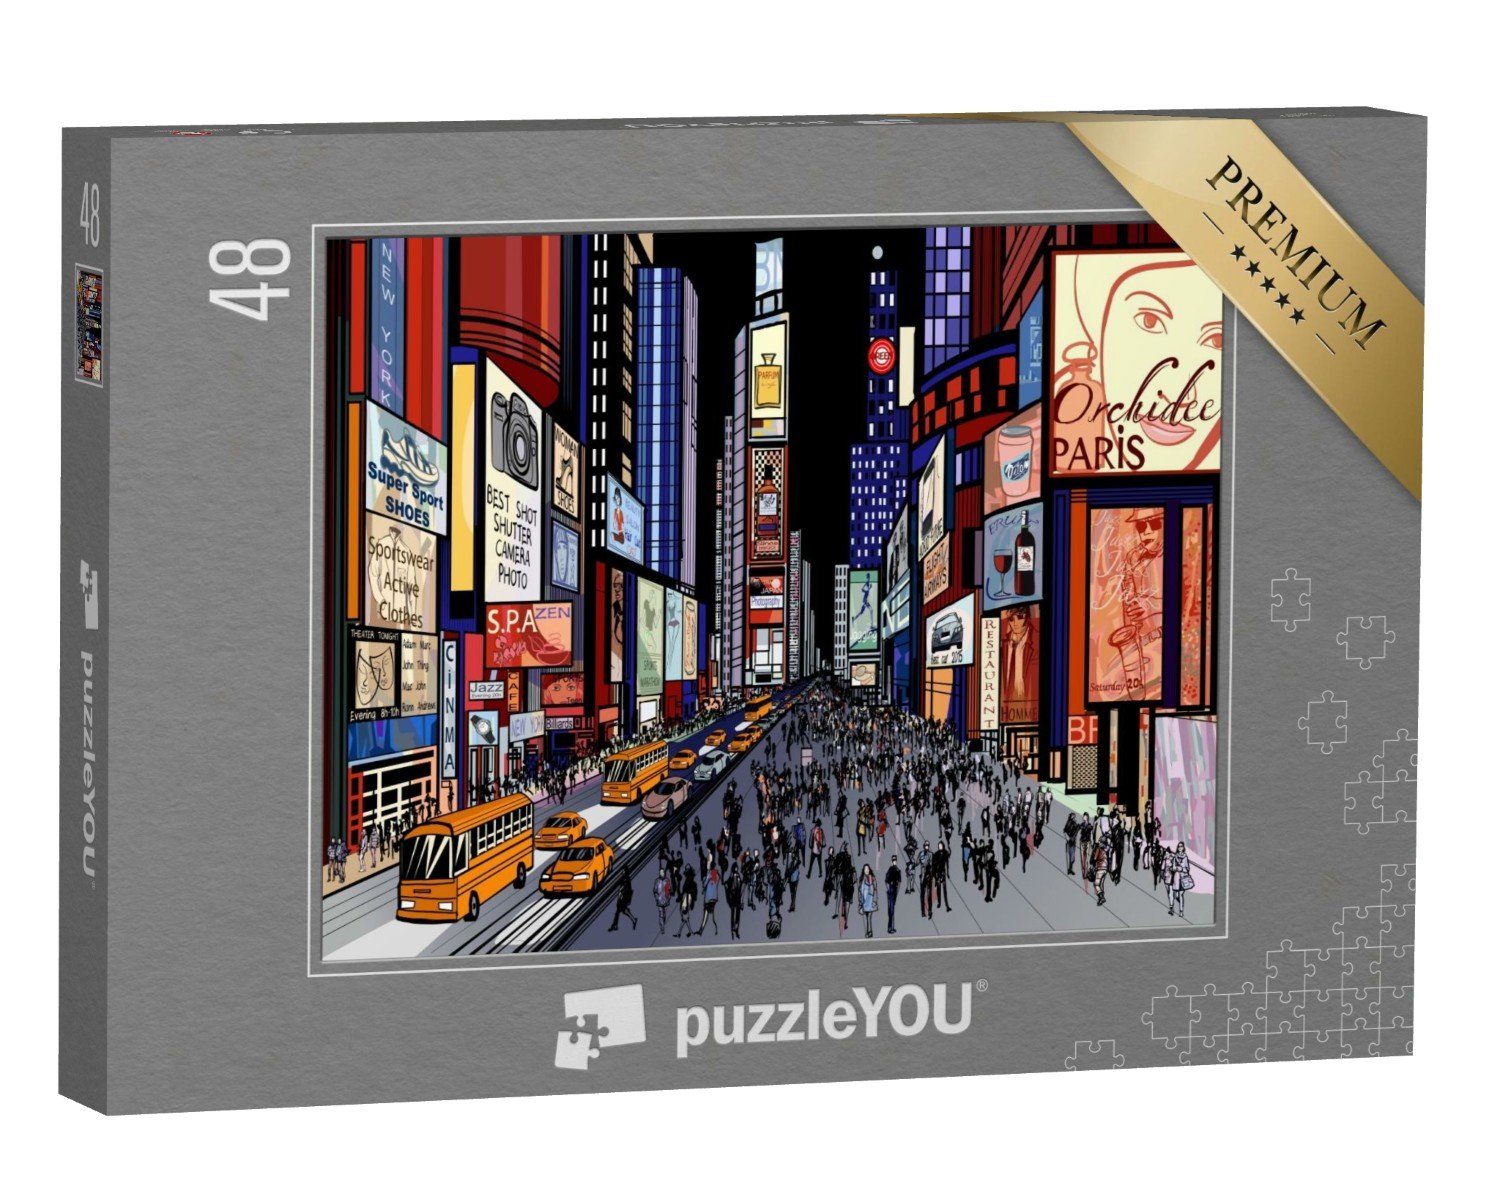 & Kunst puzzleYOU puzzleYOU-Kollektionen Times Puzzle Puzzleteile, Square, bei York Illustration, Nacht, New Fantasy 48